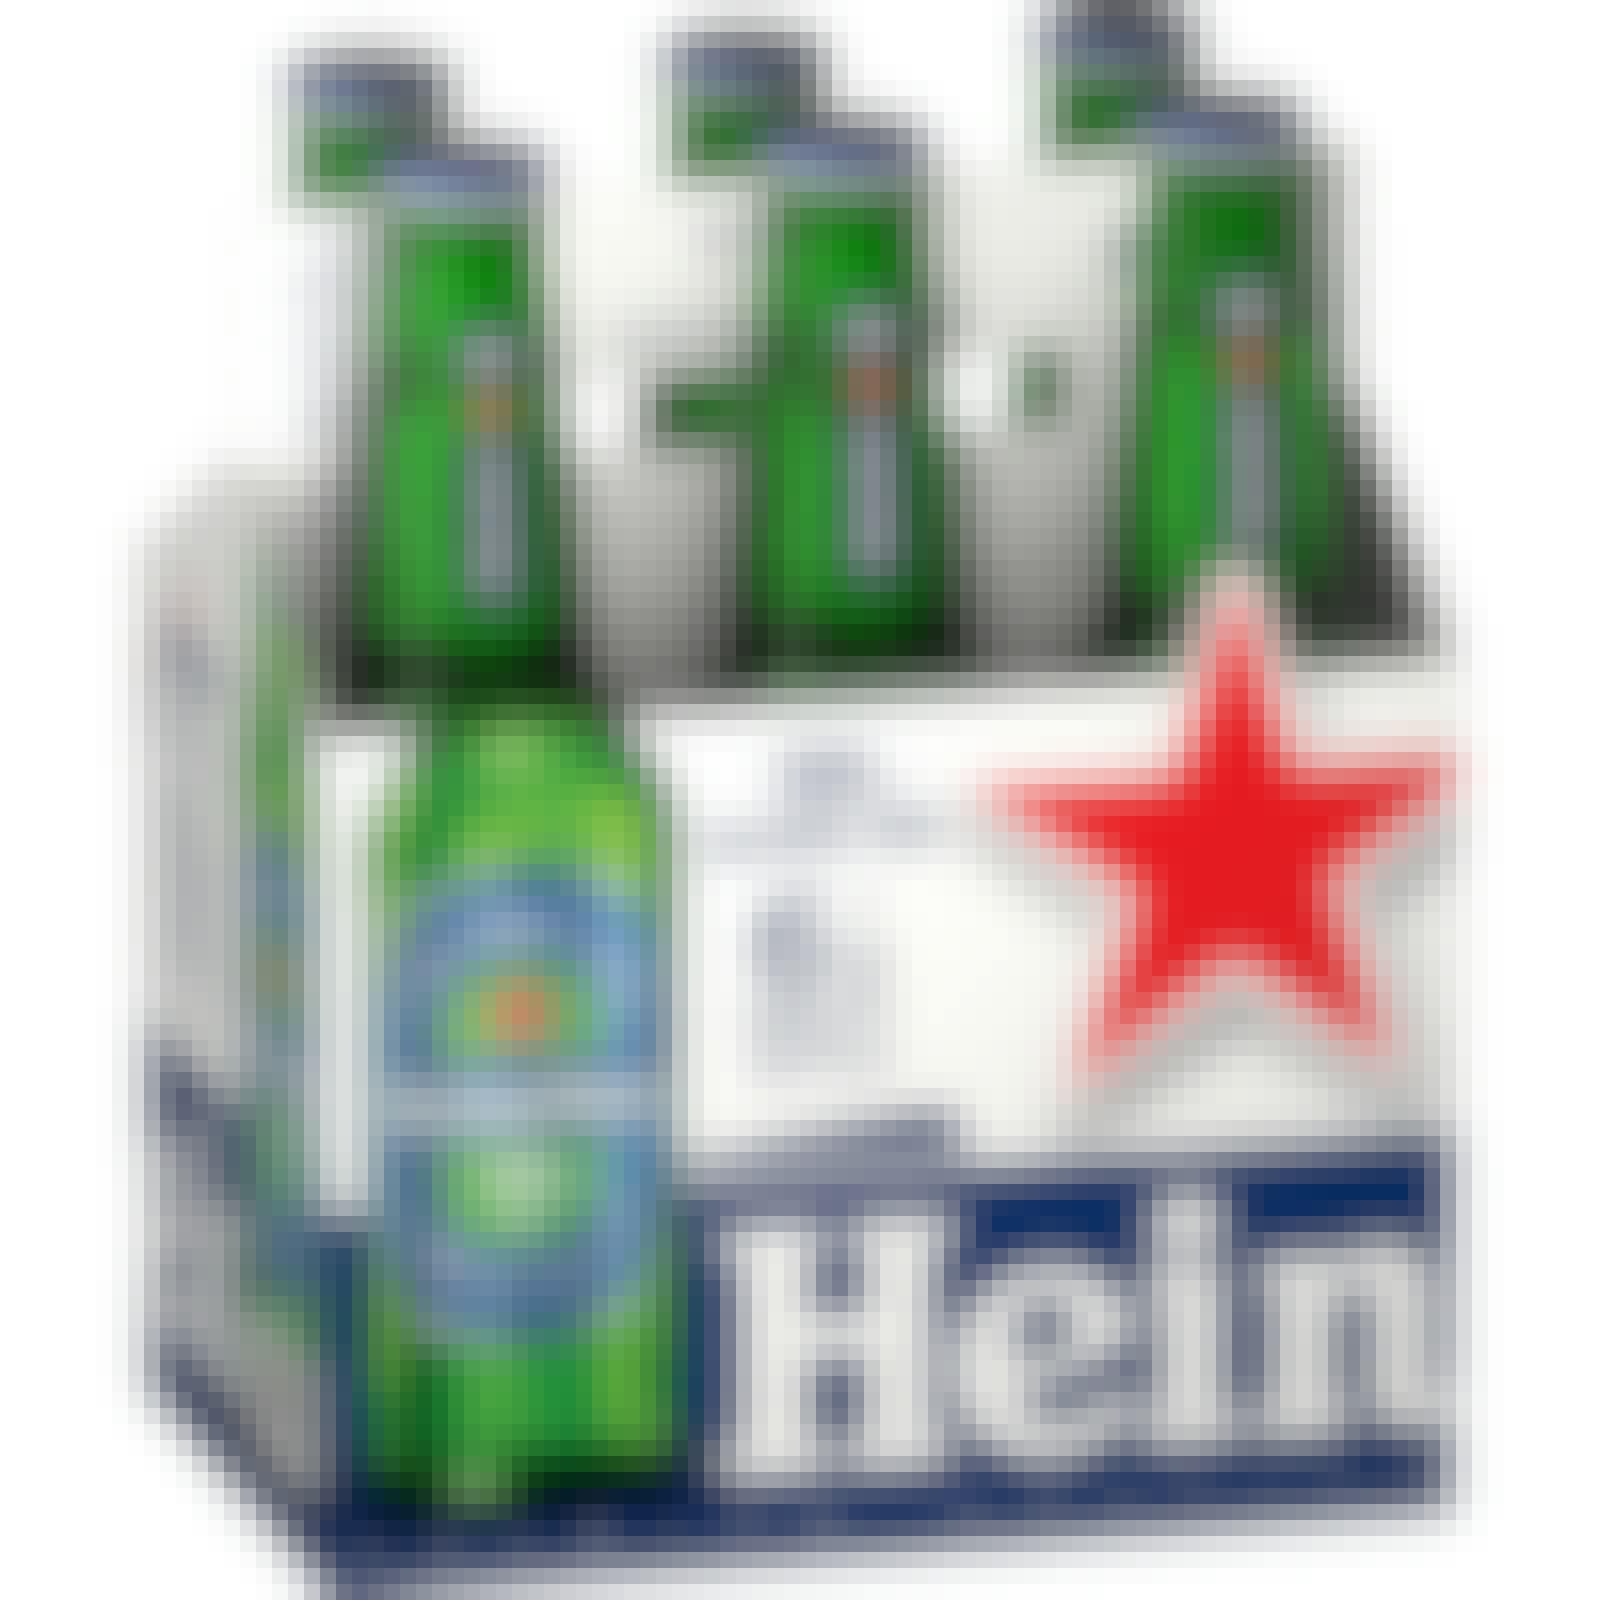 Heineken 0.0 6 pack 12 oz. Bottle